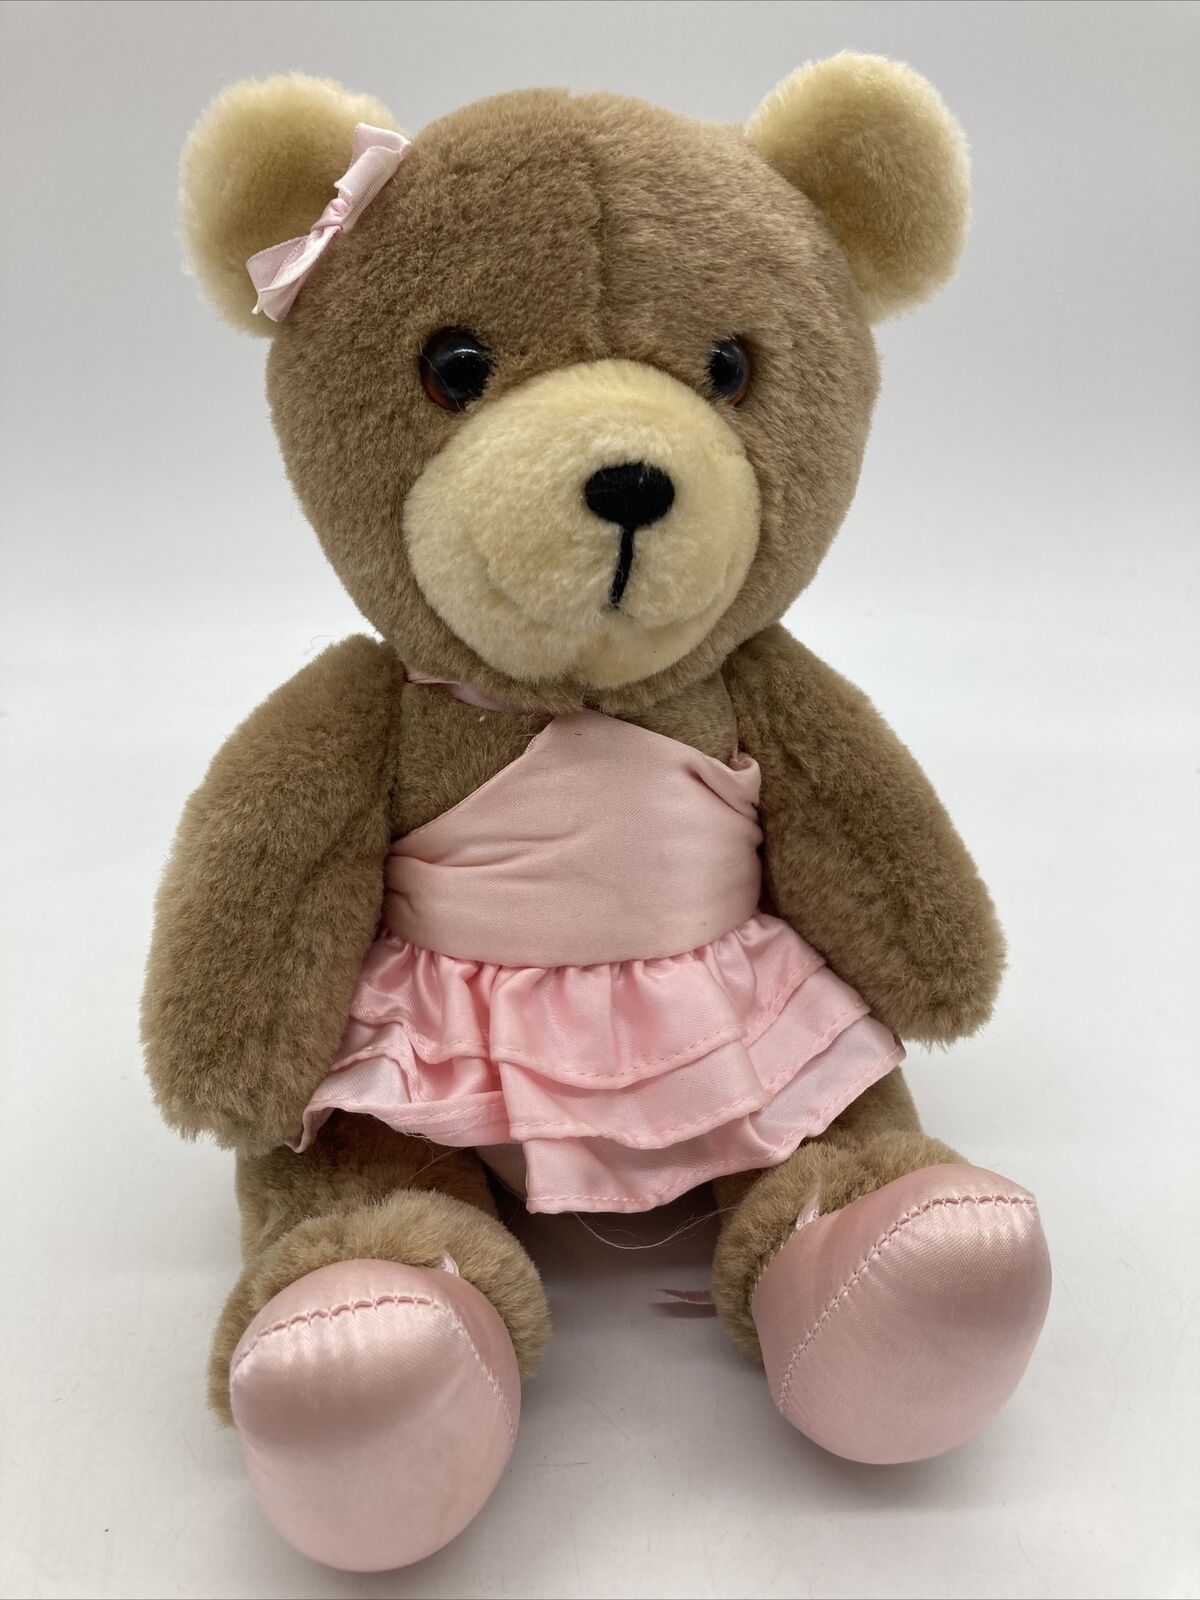 Vintage Dakin Ballerina Teddy Bear Plush Doll With Pink Tutu Dress 1985 Korea